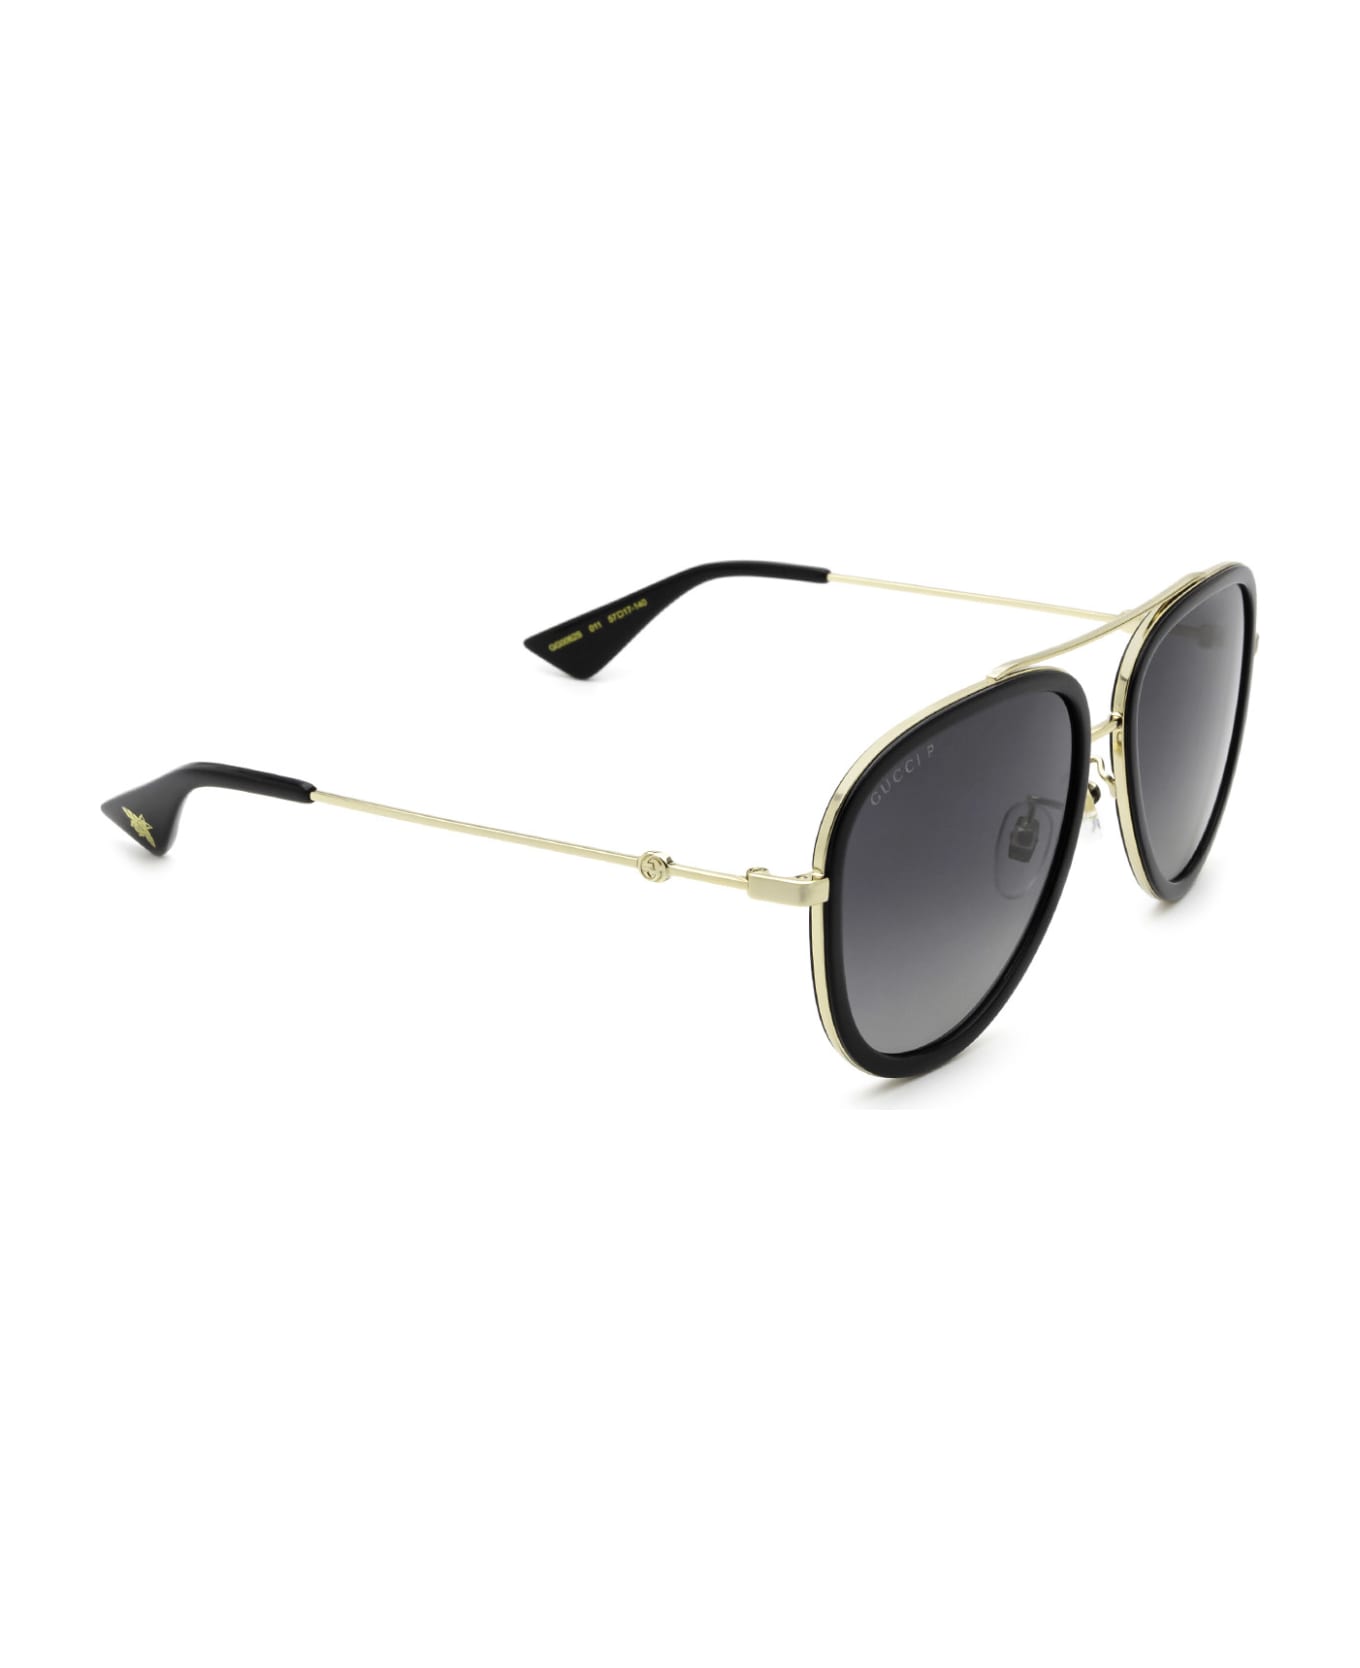 Gucci Eyewear Gg0062s Gold Sunglasses - Gold